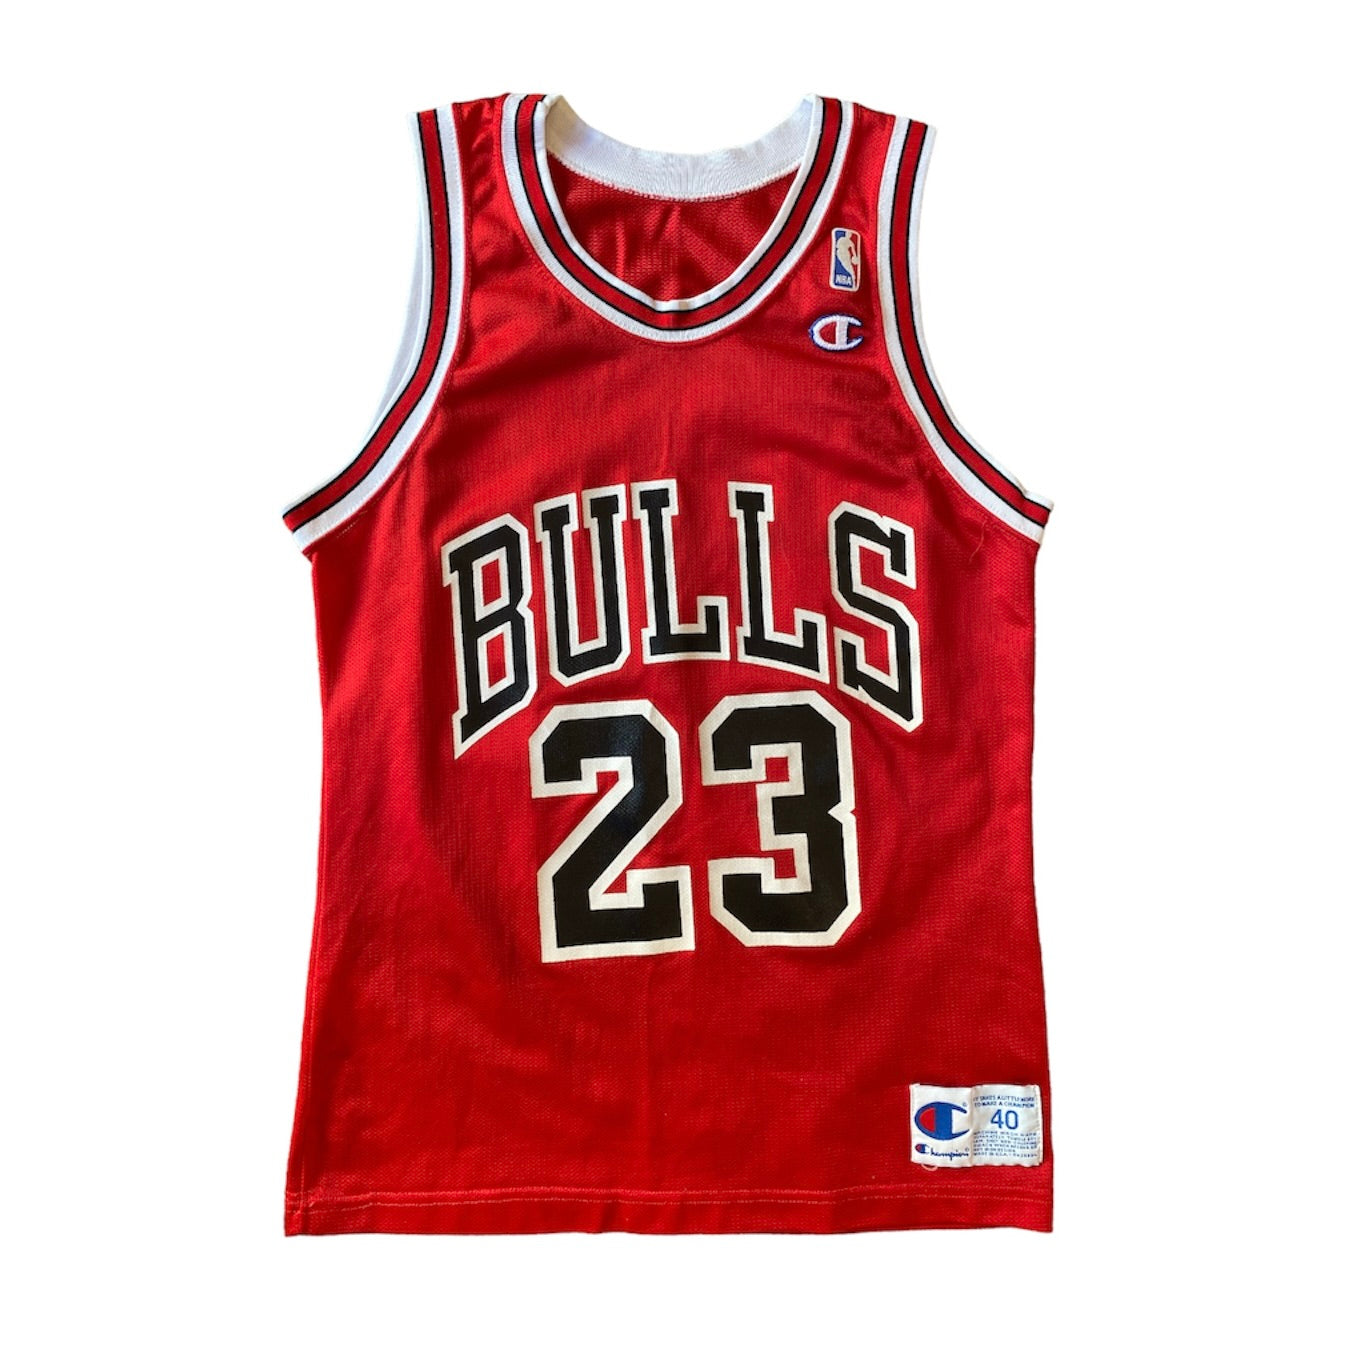 Vintage 90s Champion Chicago Bulls Micheal Jordan Basketball Jersey